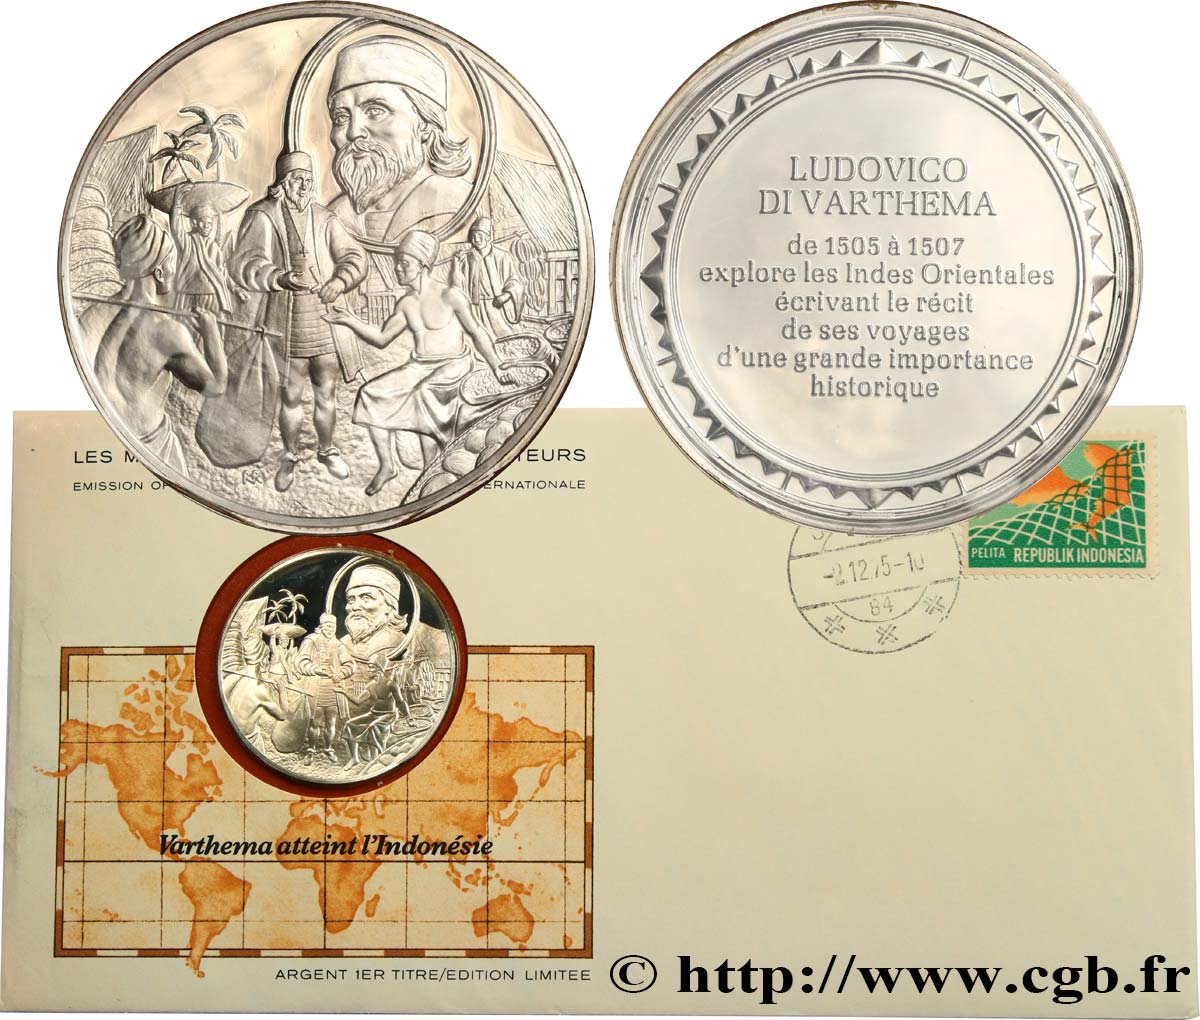 THE GREAT EXPLORERS  MEDALS Enveloppe “Timbre médaille”, Varthema atteint l’Indonésie MS